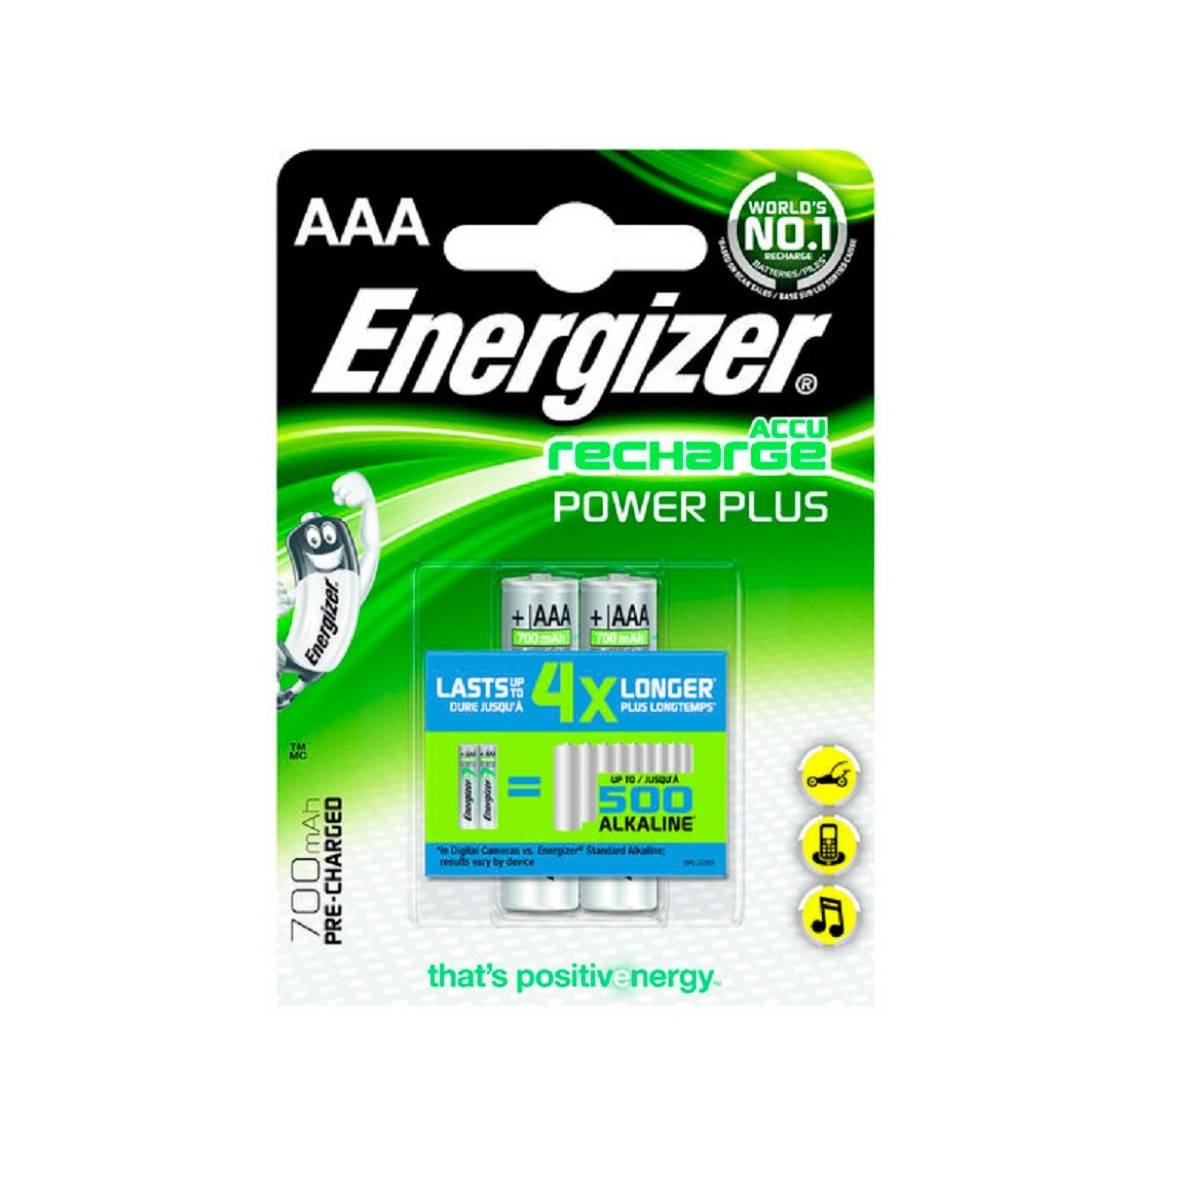 Energizer Power Plus Batteria ricaricabile 700mAh HR03 (AAA) Blister di 2 pezzi.